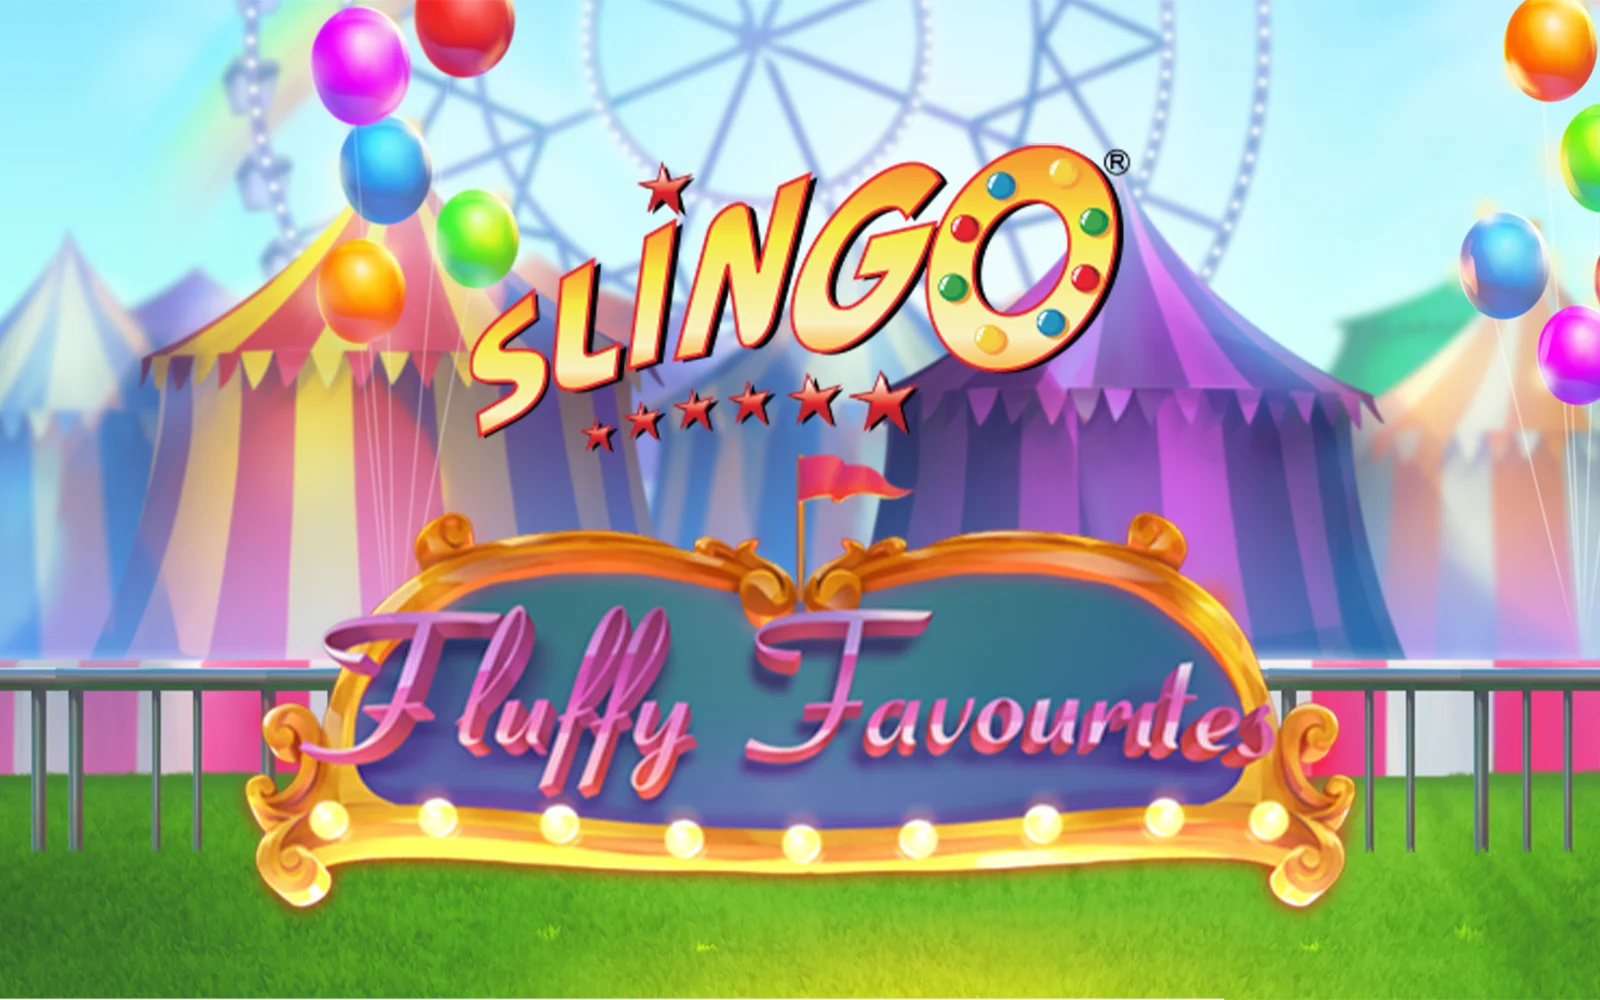 Play Slingo Fluffy Favourites on Starcasino.be online casino